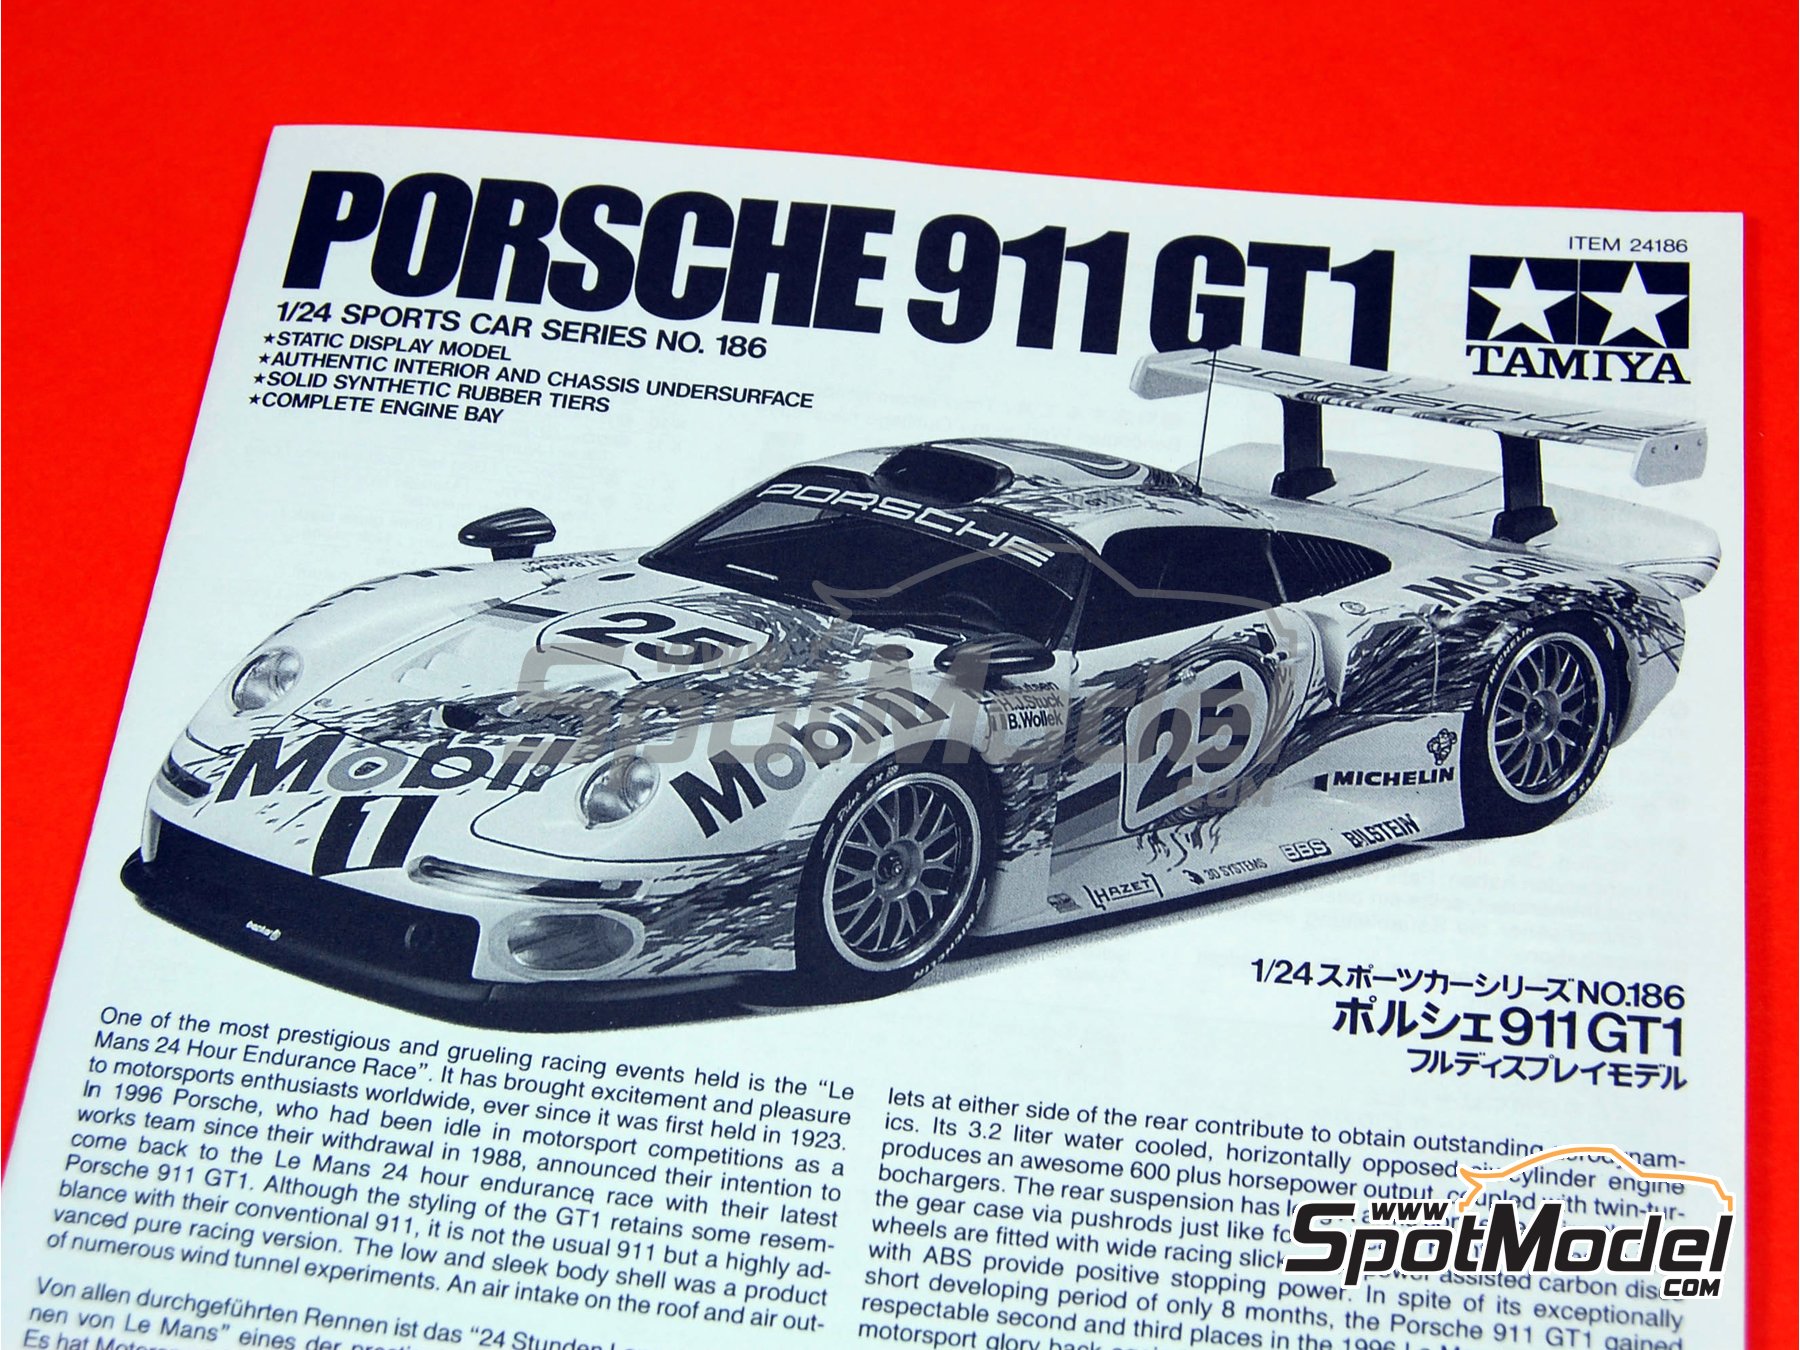 Tamiya 1/24 Sports Car Series No.186 Porsche 911 GT1 plastic model 24186 Good 